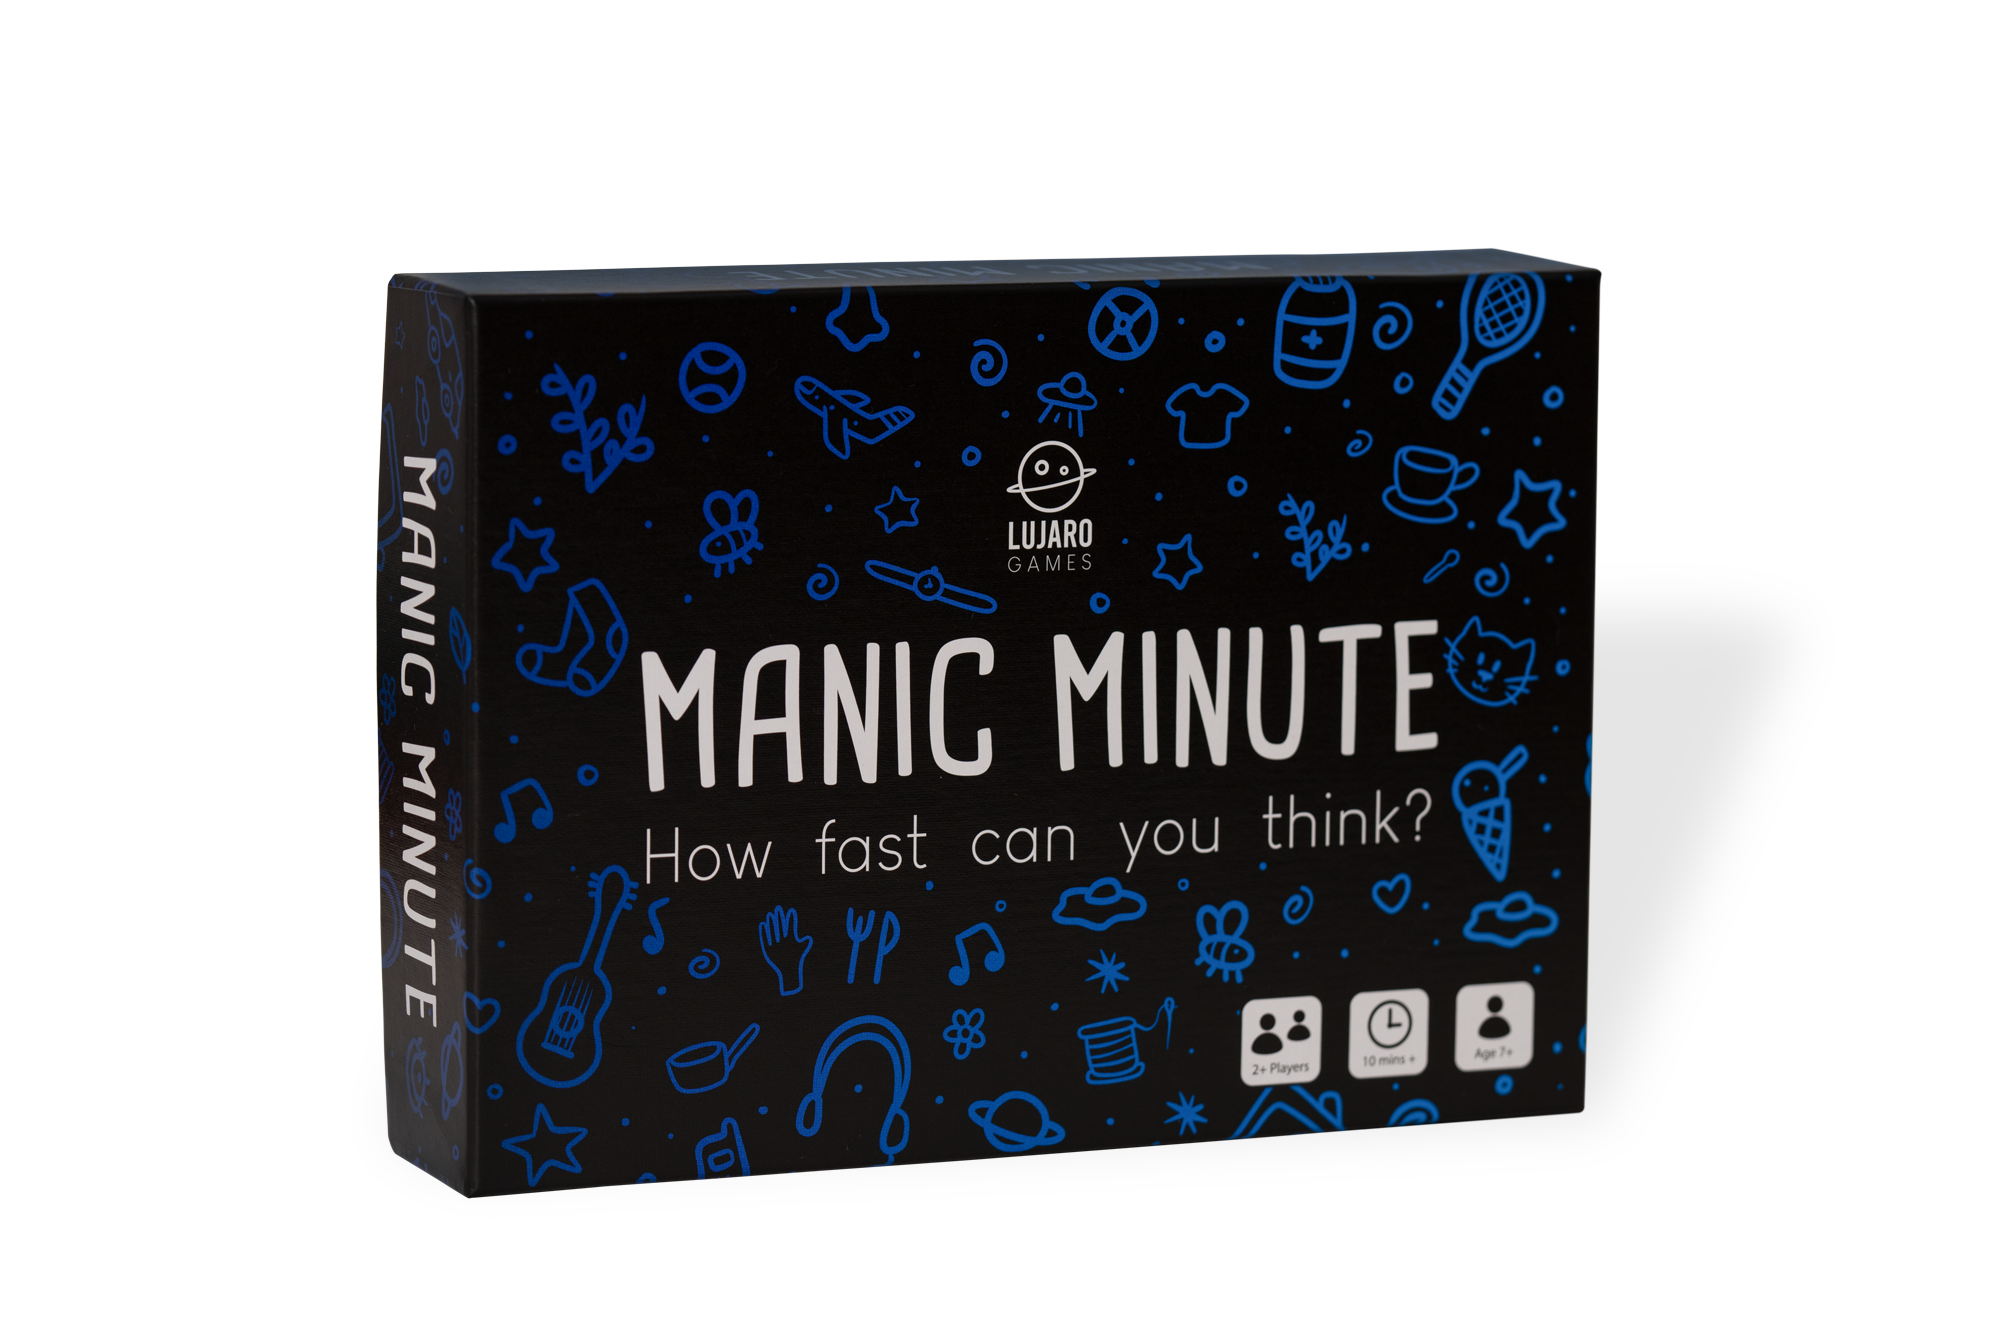 Manic Minute Original Edition box